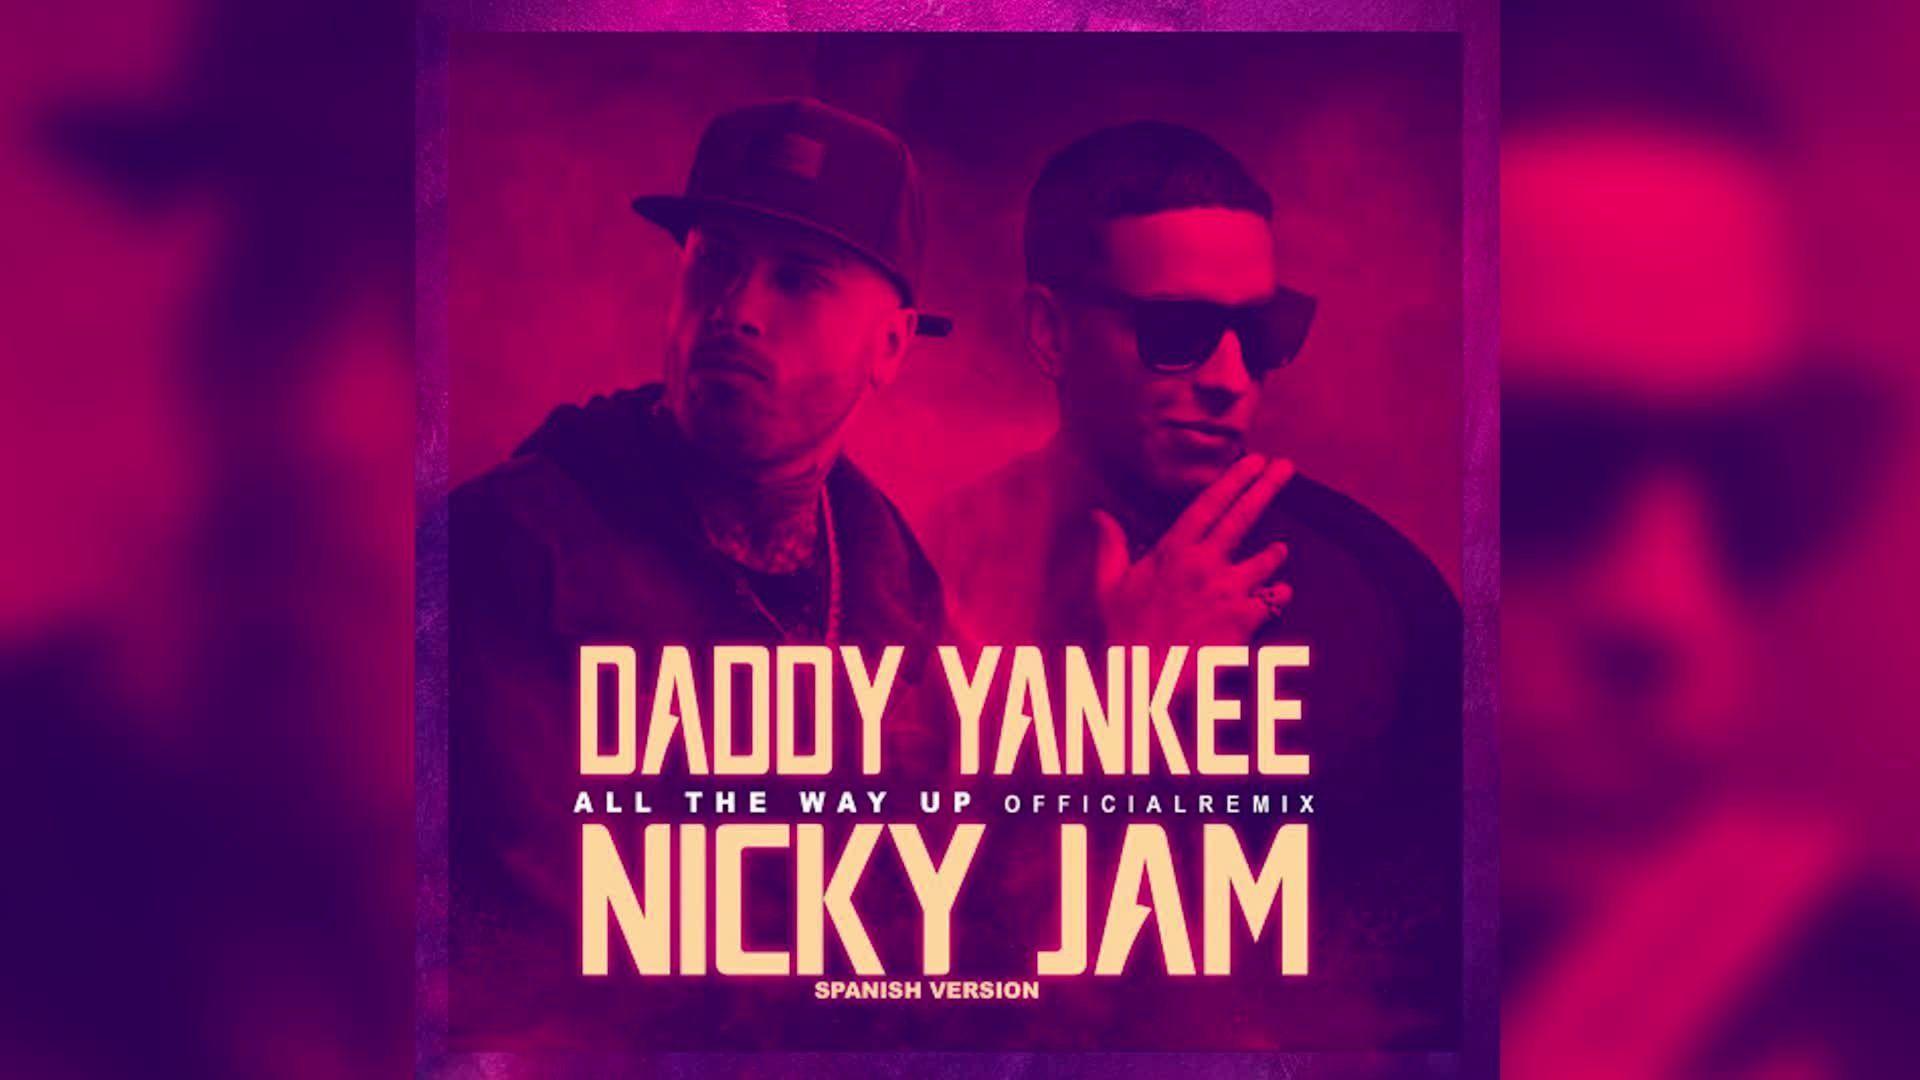 Daddy yankee voy. Daddy Yankee Nicky Jam. Daddy Yankee фото. Nicky Jam feat. Daddy Yankee. Fat Joe Daddy Yankee.